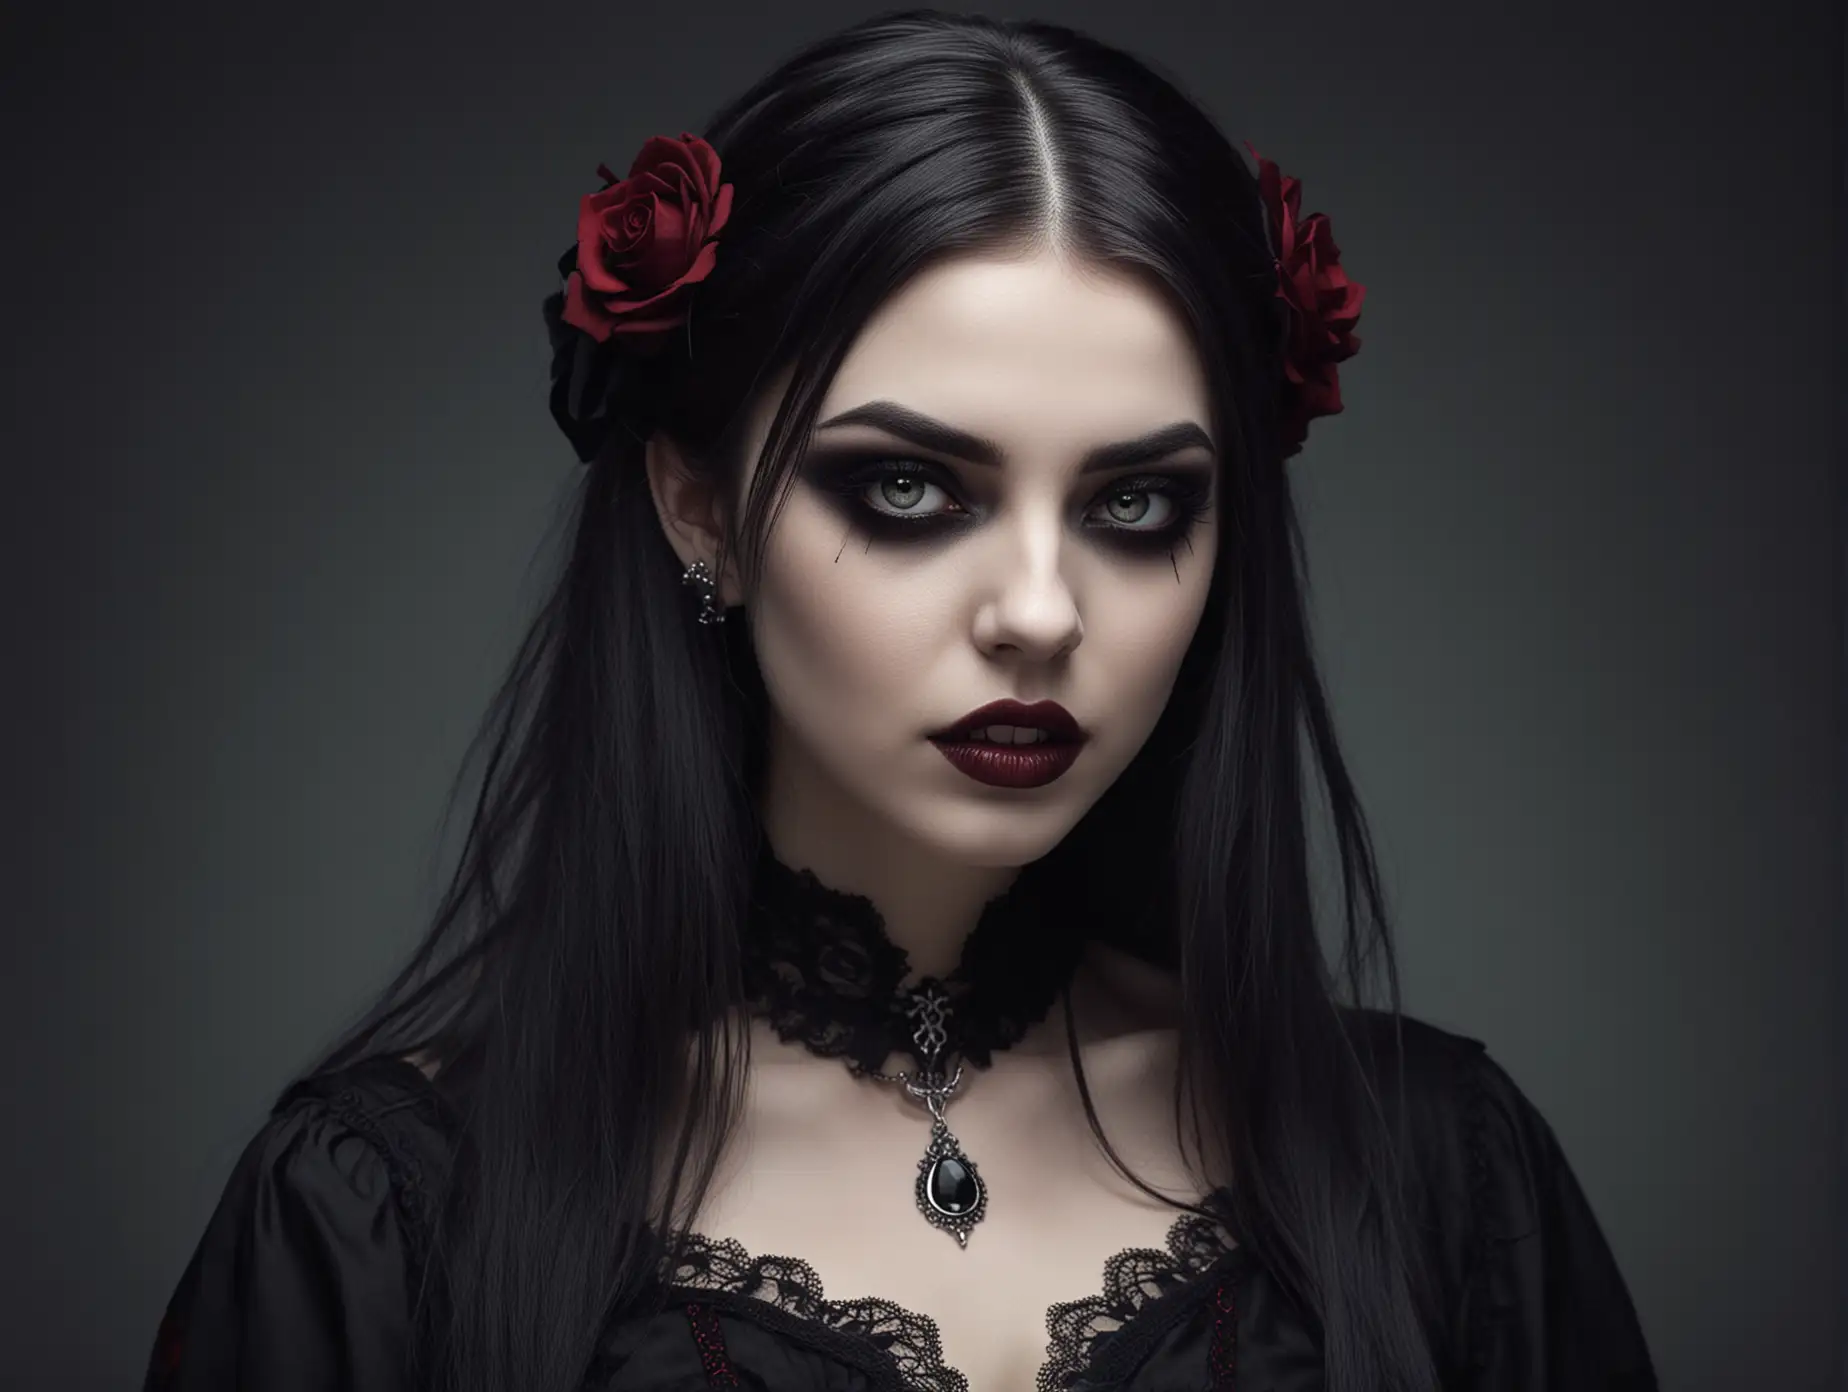 a vampire styled gothic girl